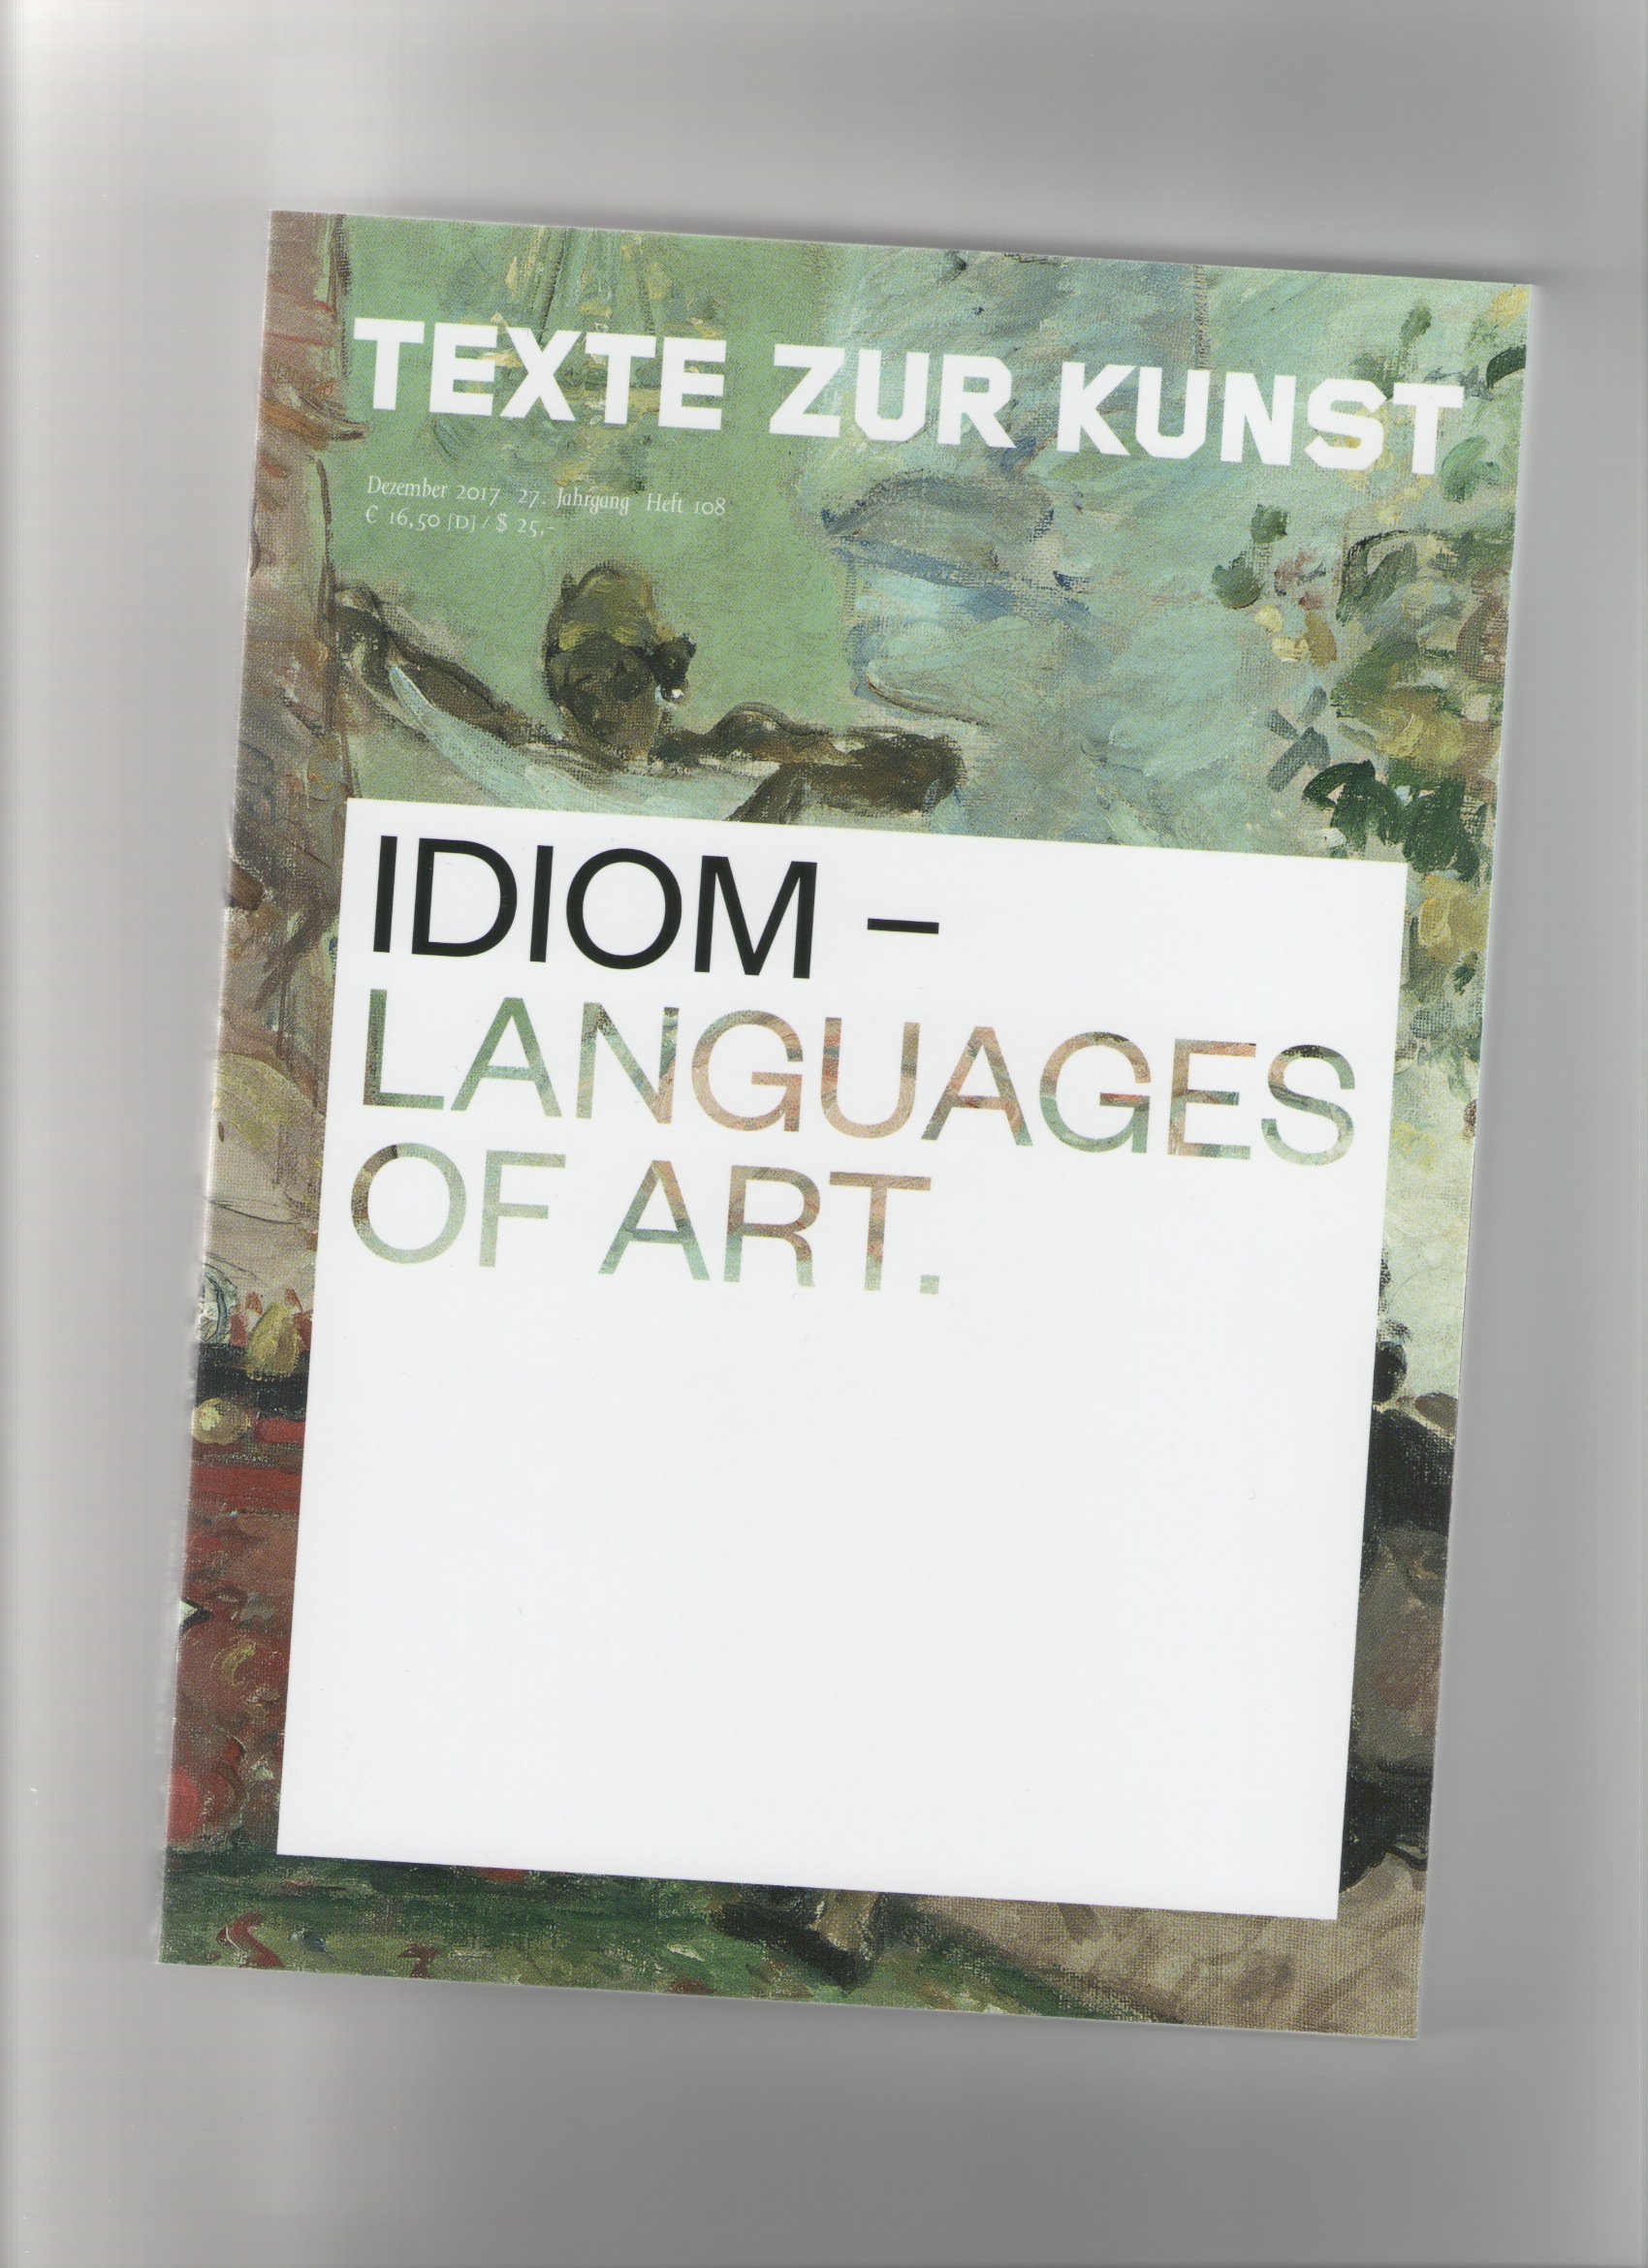 TEXTE ZUR KUNST (ed.) - Texte Zur Kunst 27/108 (Dec. 2017) Idiom: Languages of Art